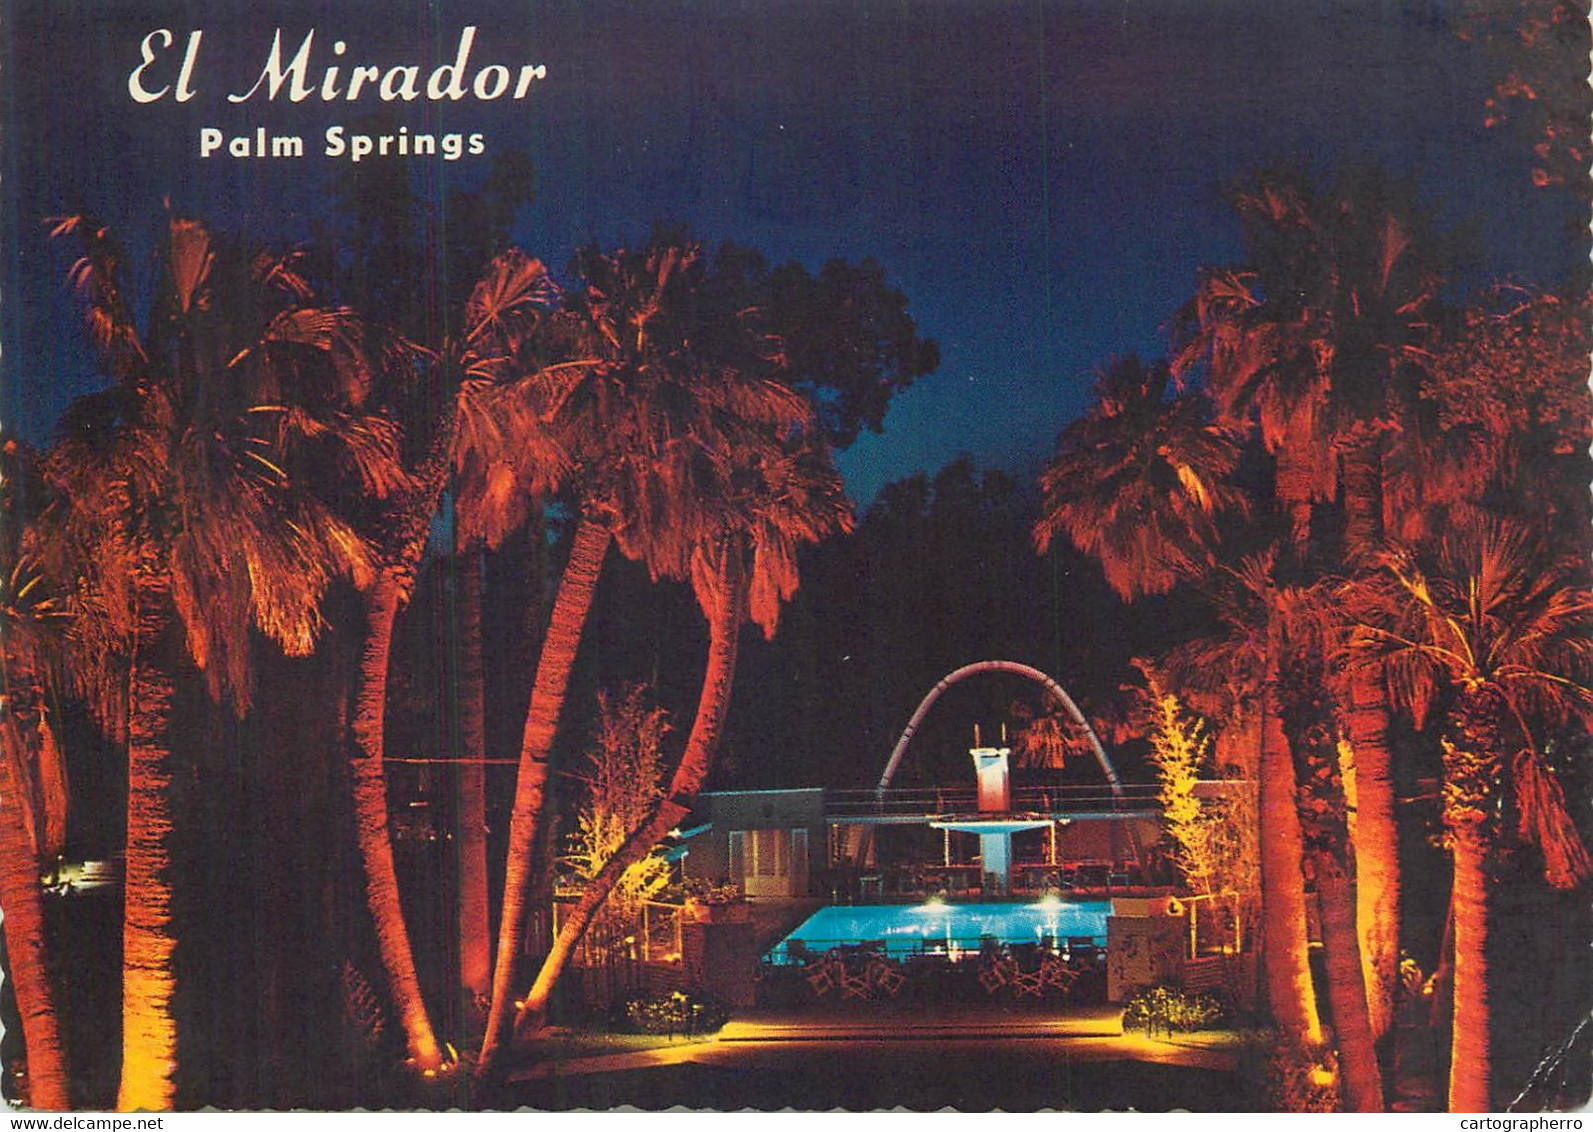 USA Palm Springs CA El Mirador Hotel Nocturnal View - Palm Springs